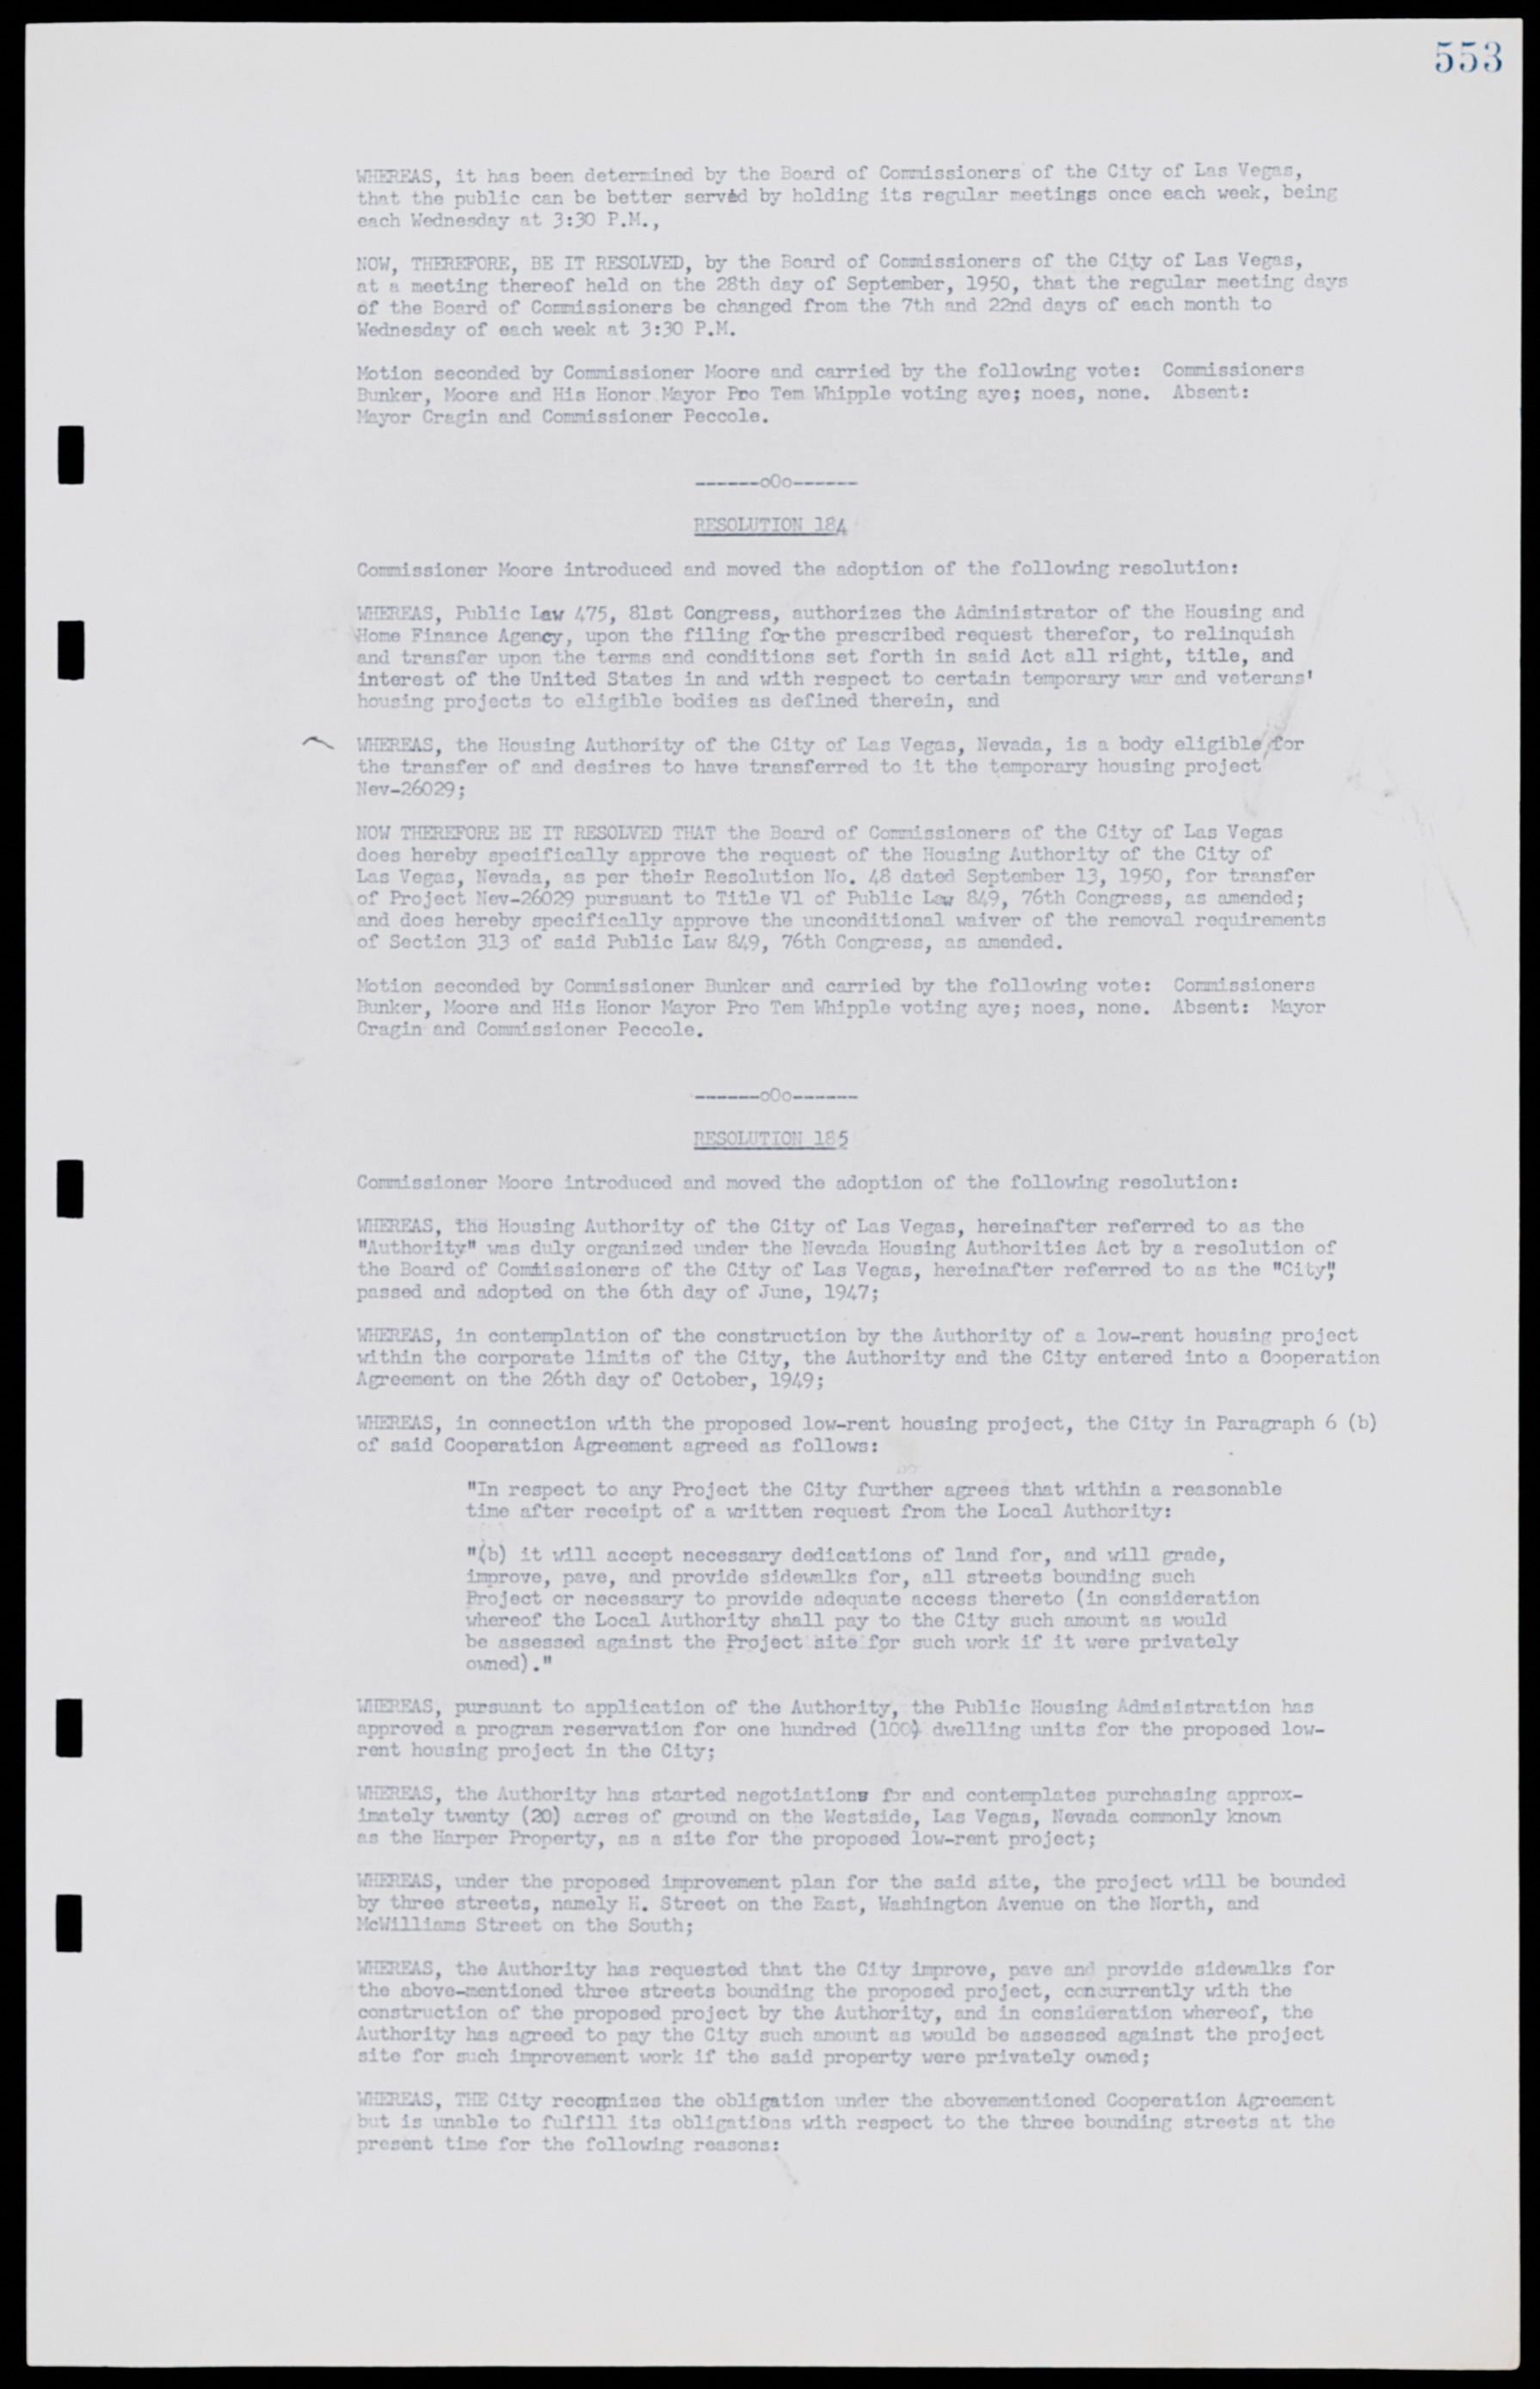 Las Vegas City Commission Minutes, January 7, 1947 to October 26, 1949, lvc000006-583